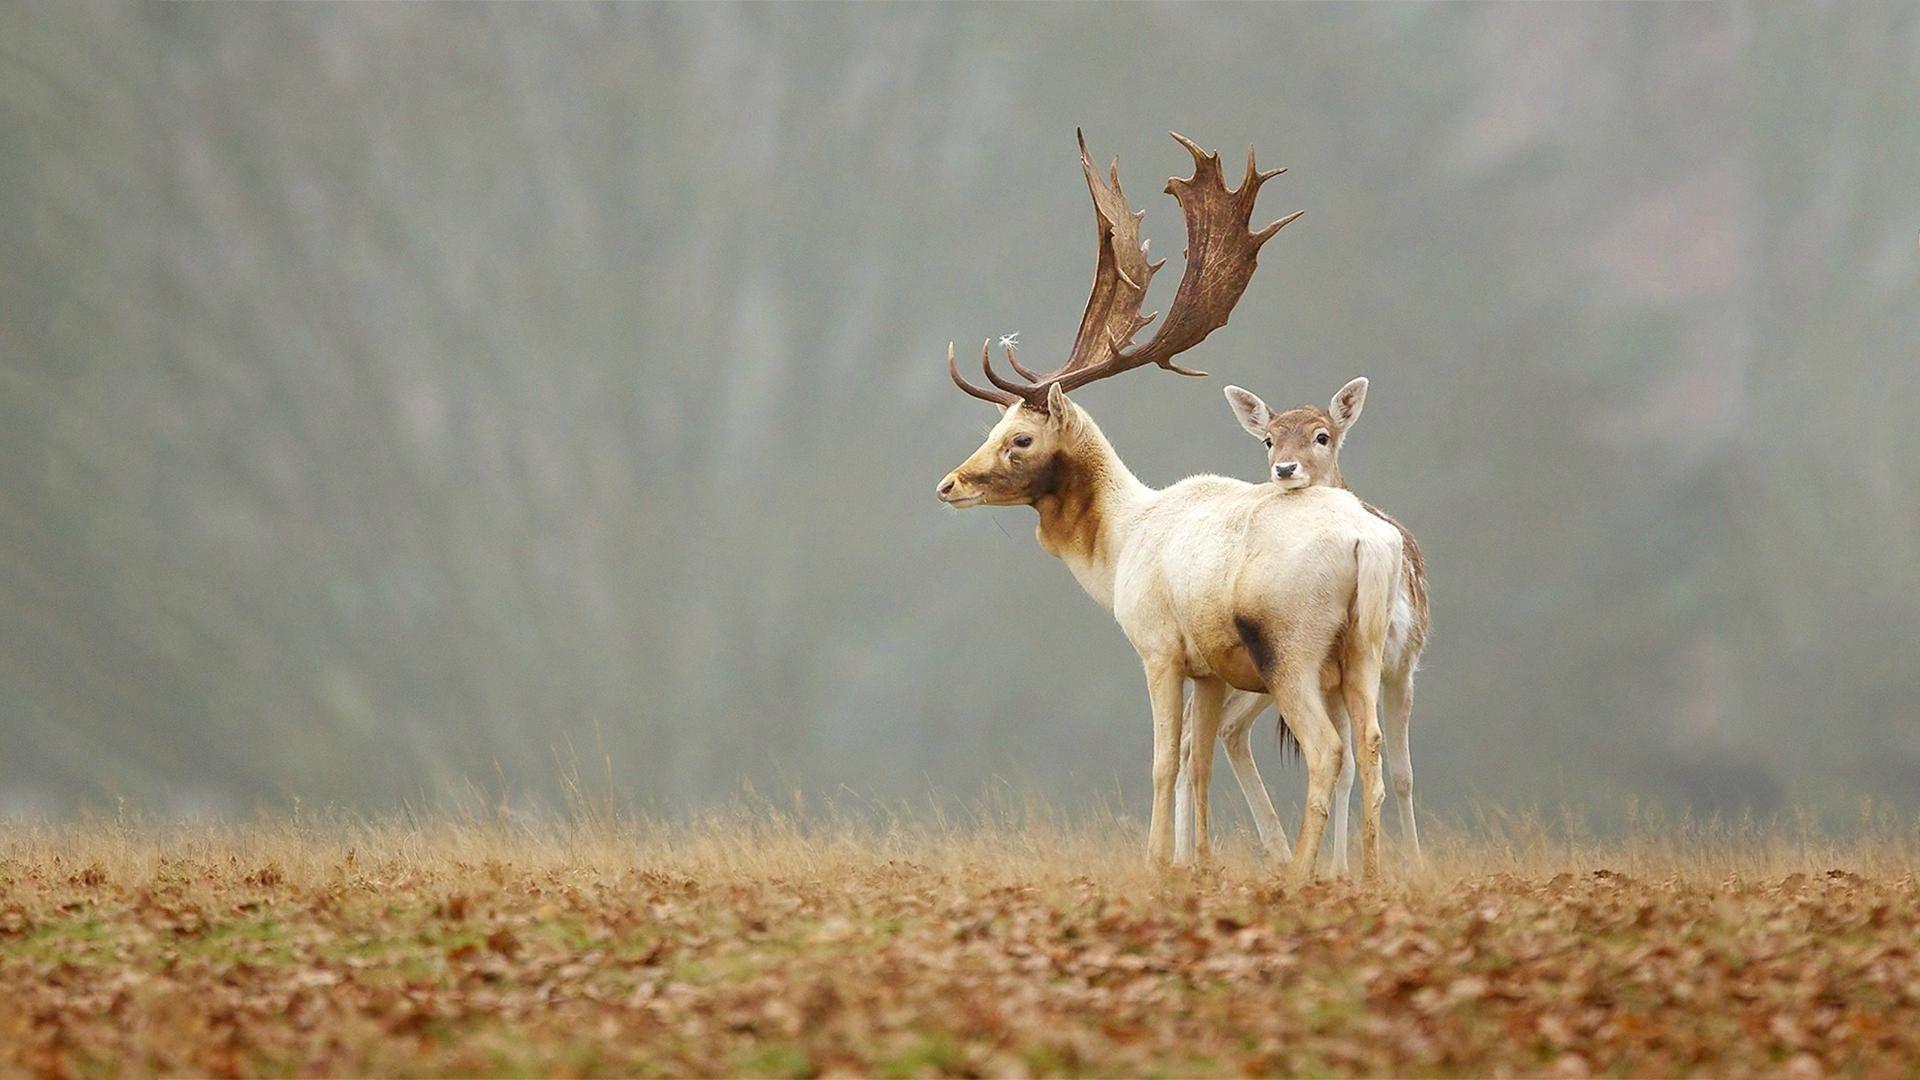 Deer Wallpaper. Free Download Latest Cute Animals HD Desktop Image